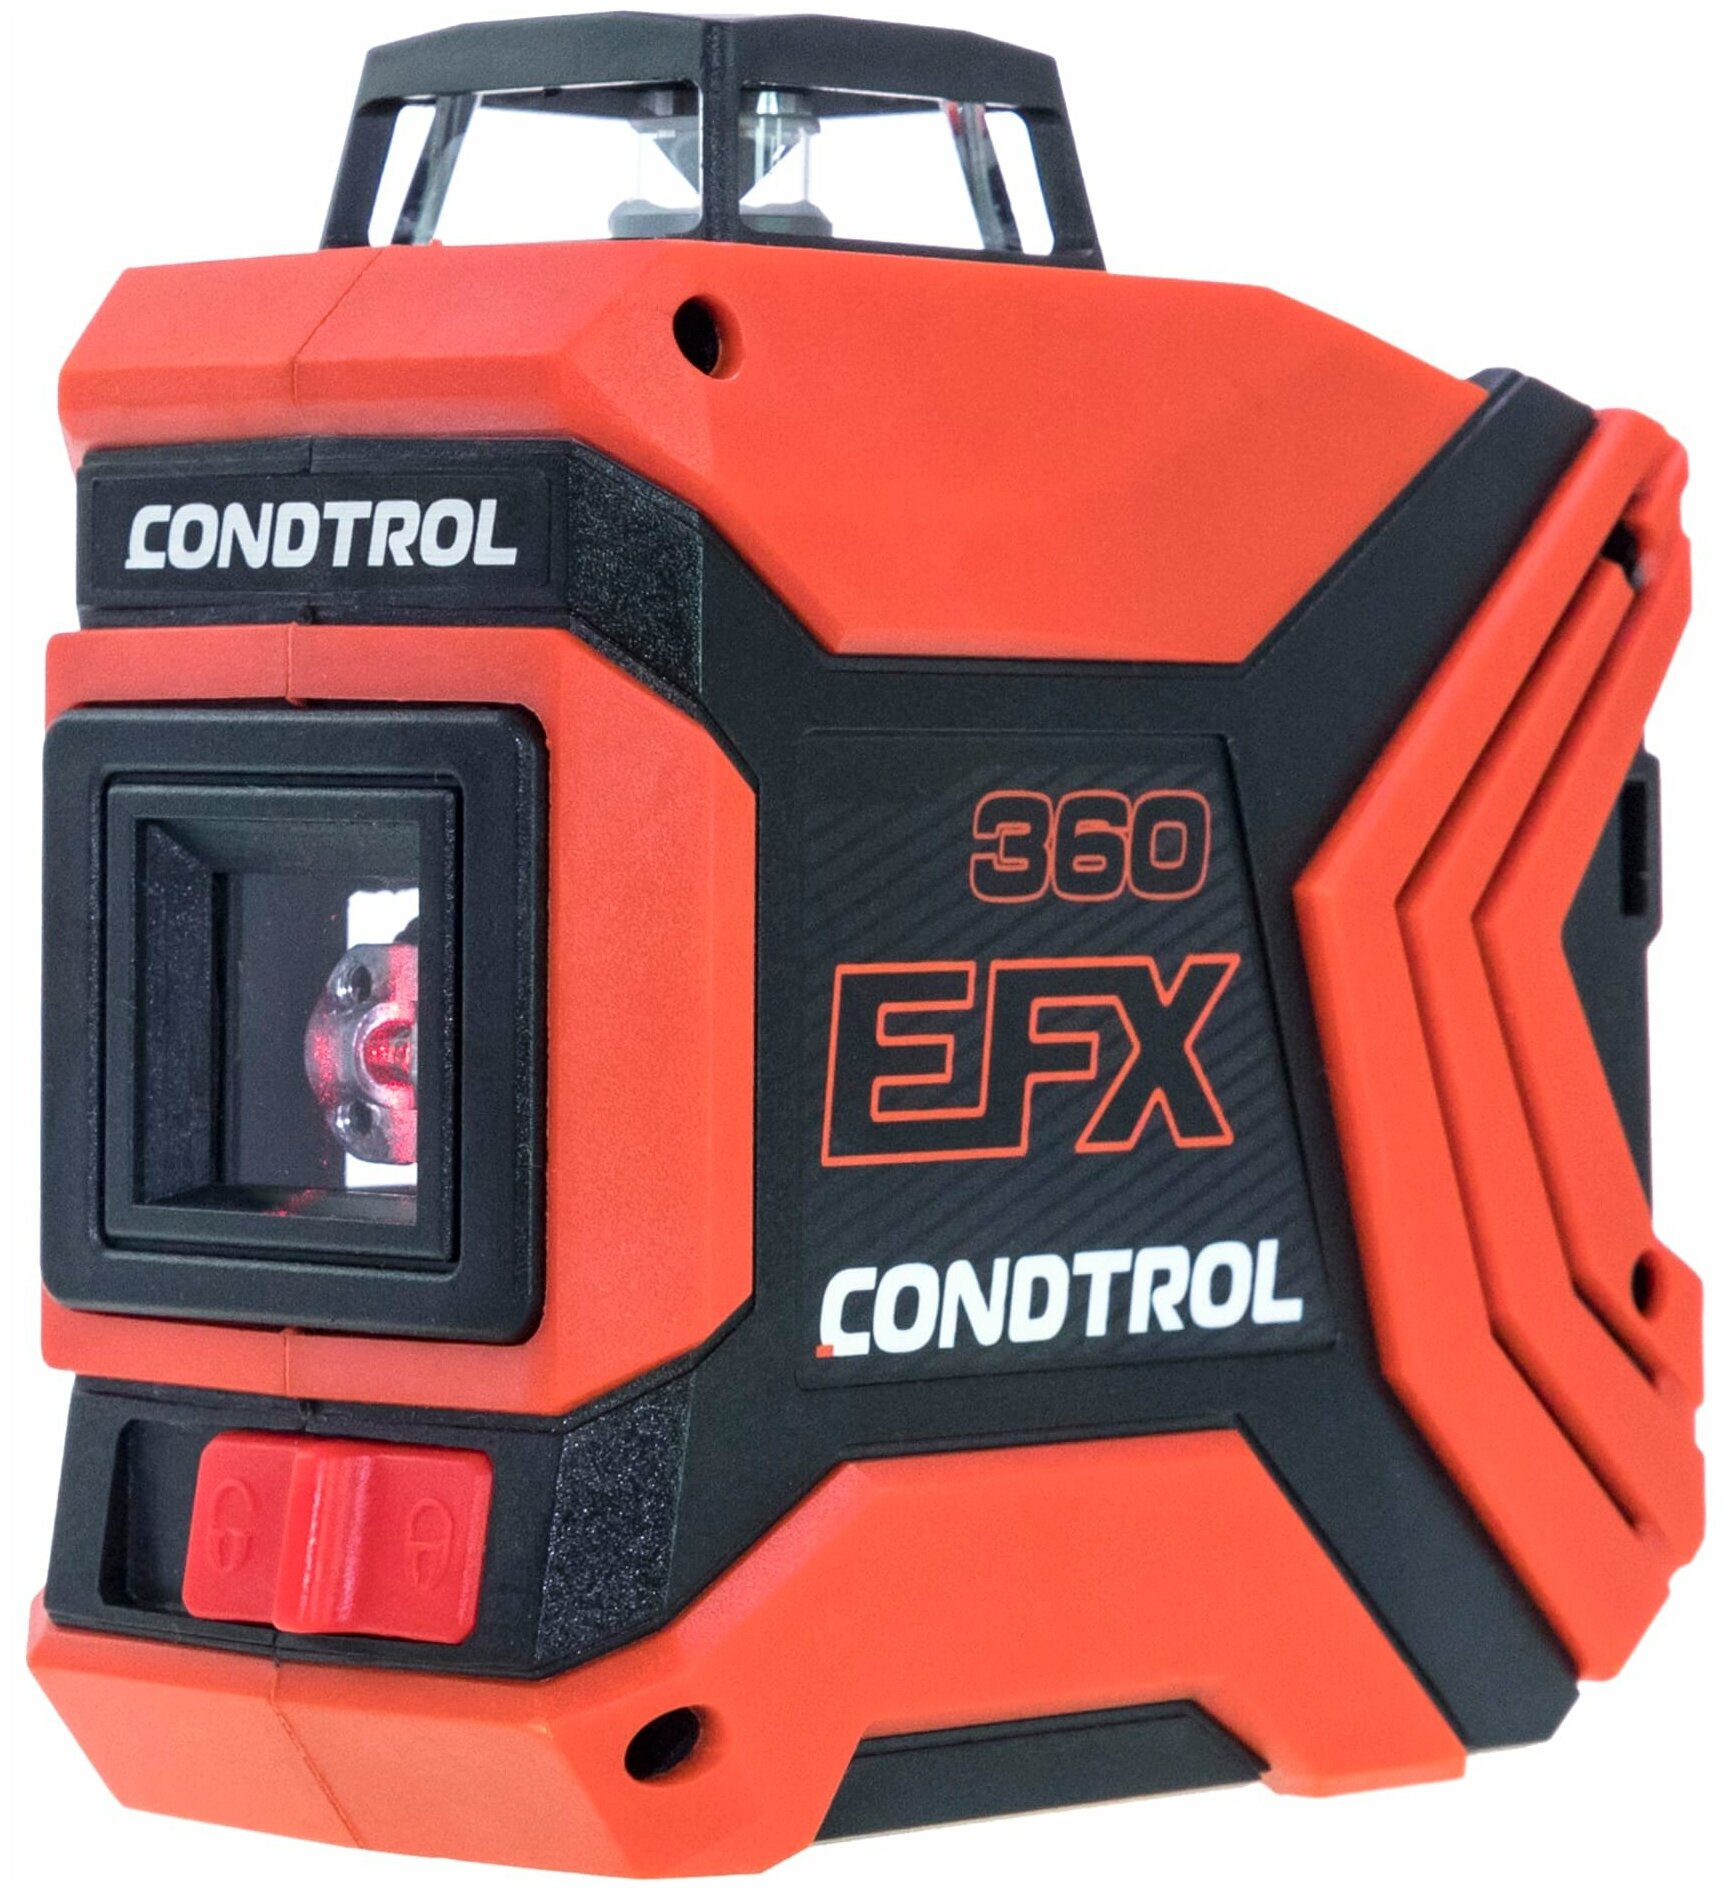   Condtrol EFX360 Set   